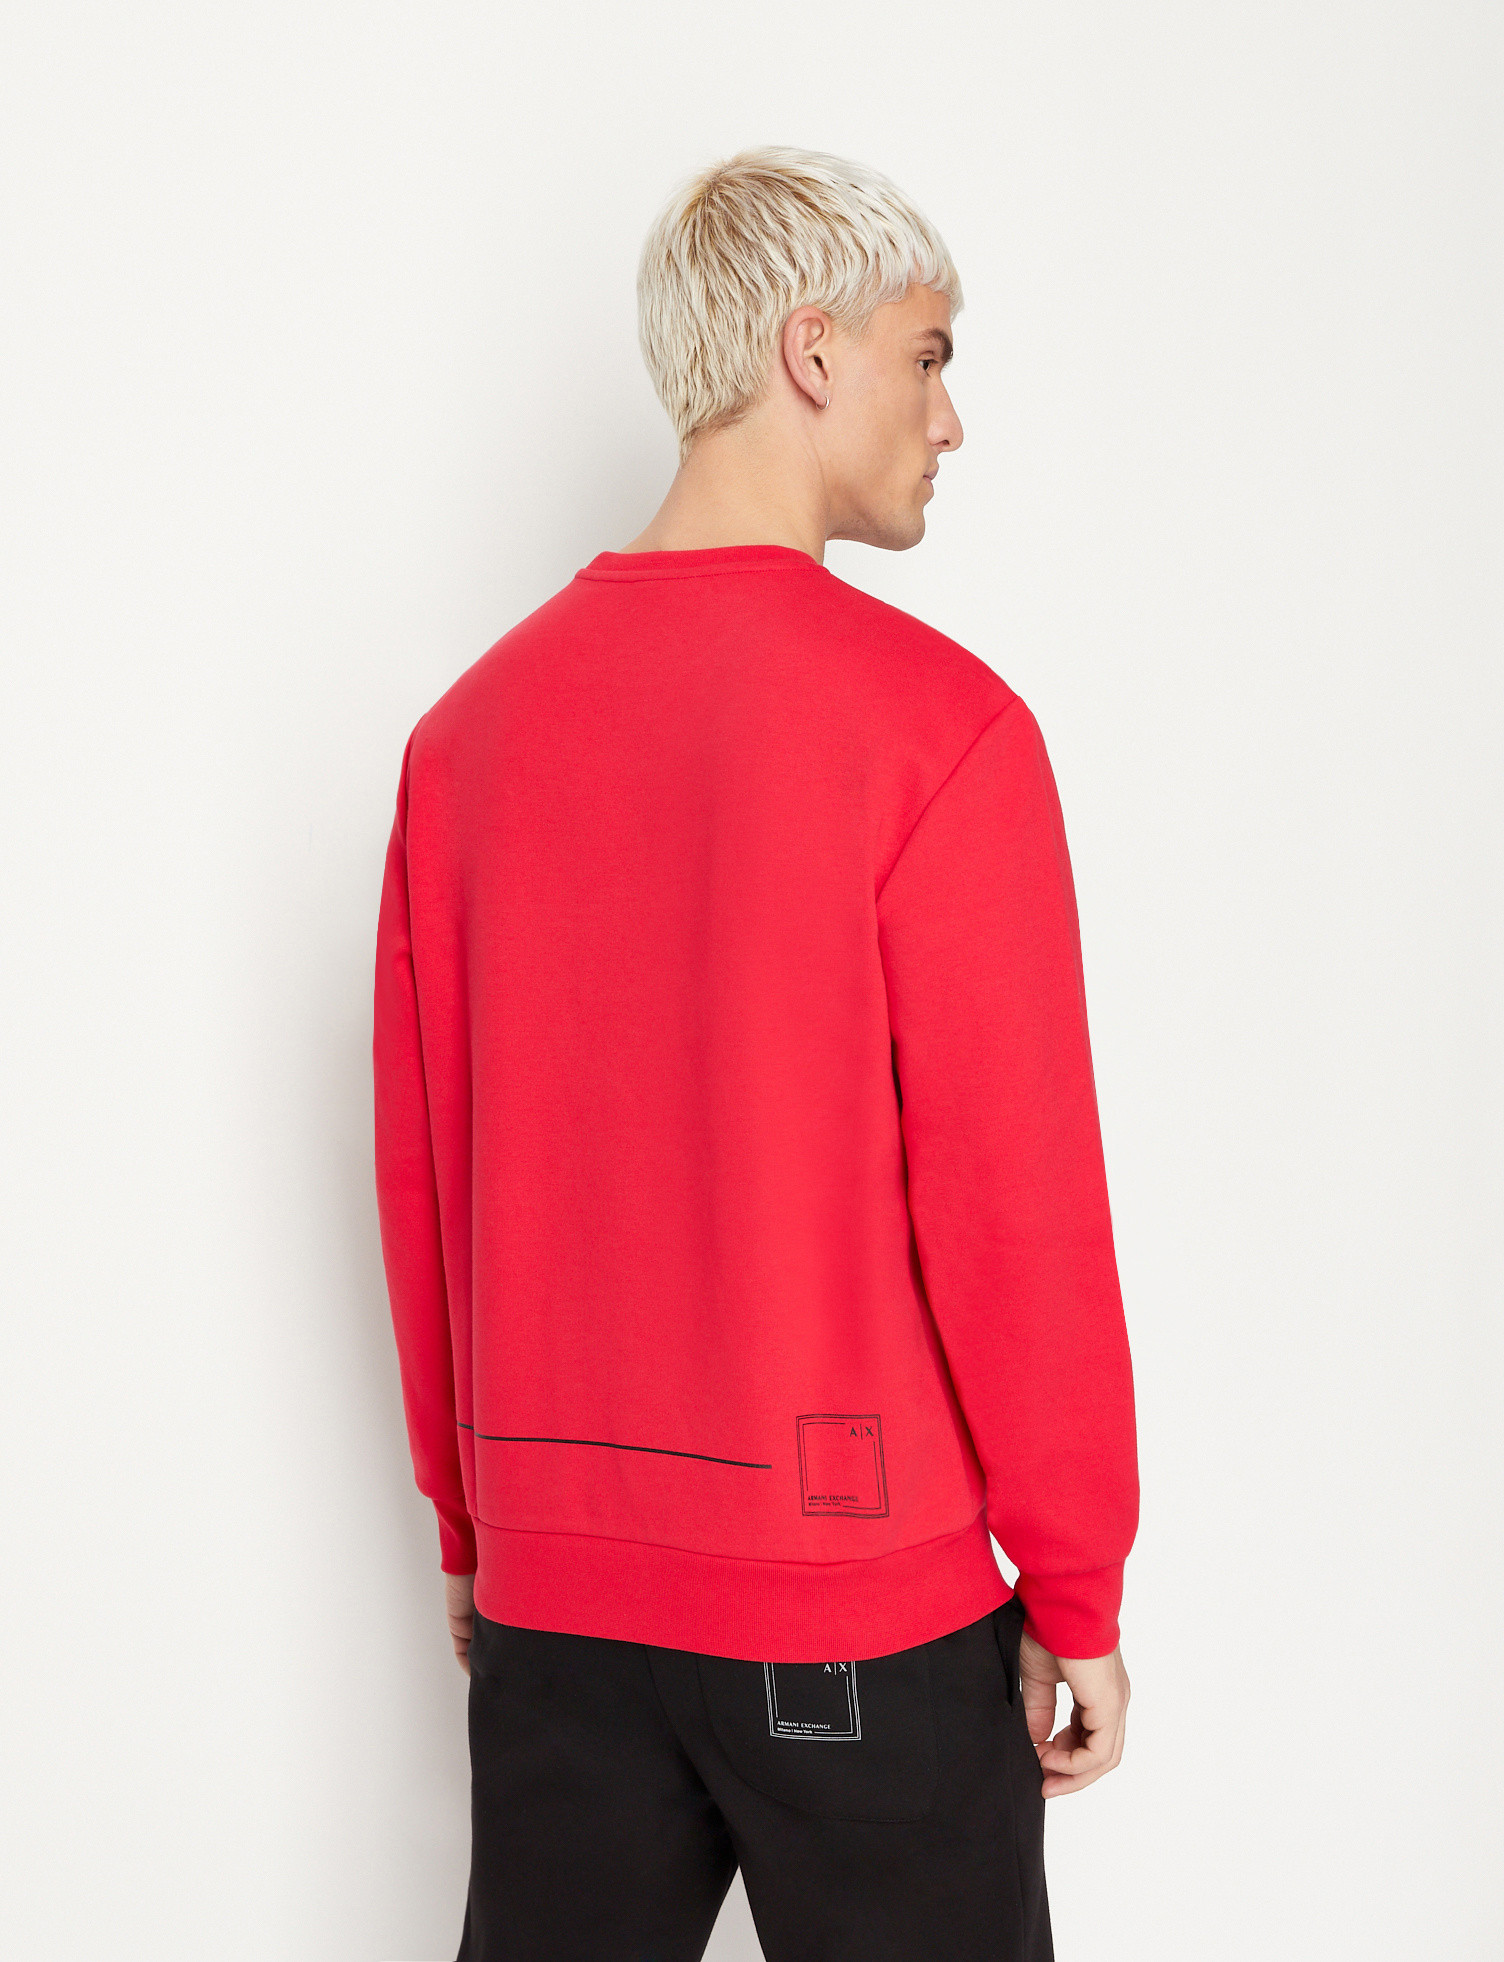 Armani Exchange - Sweatshirt with logo print, Red, large image number 2